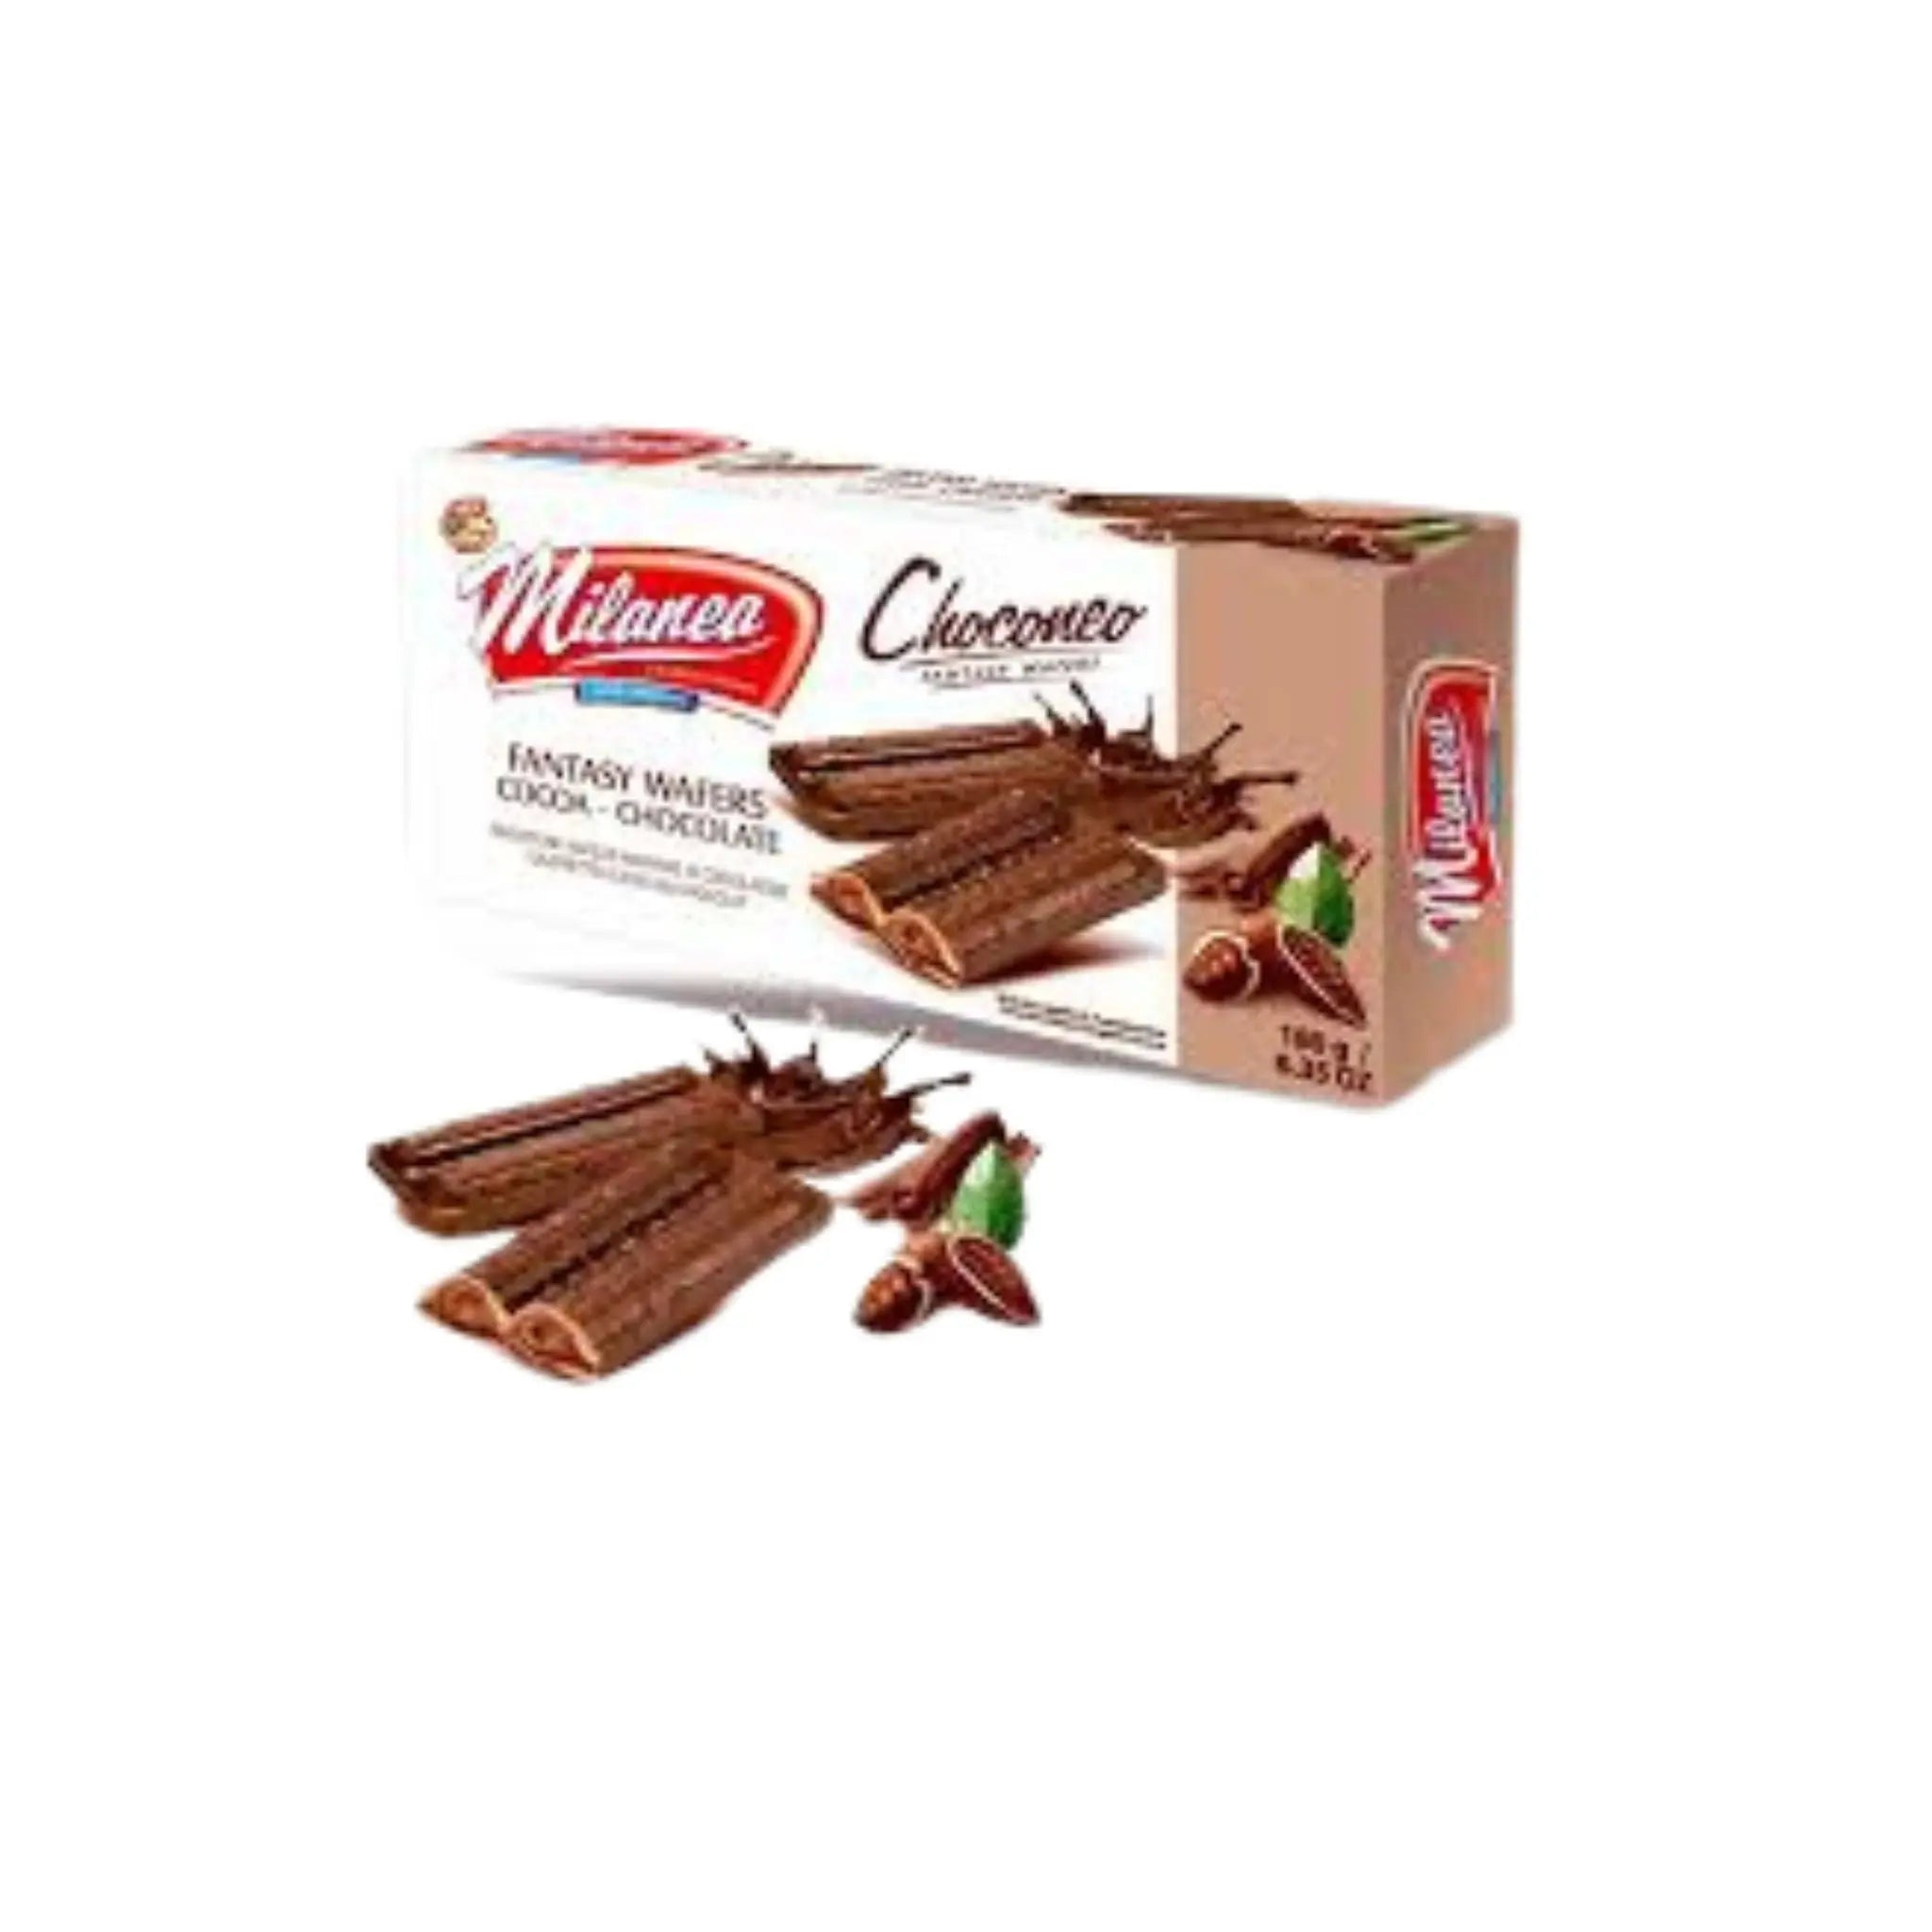 Lumar Milanea Choconeo Fantasy Wafers Cocoa  in Chocolate - 18x180g (1 carton) - Marino.AE